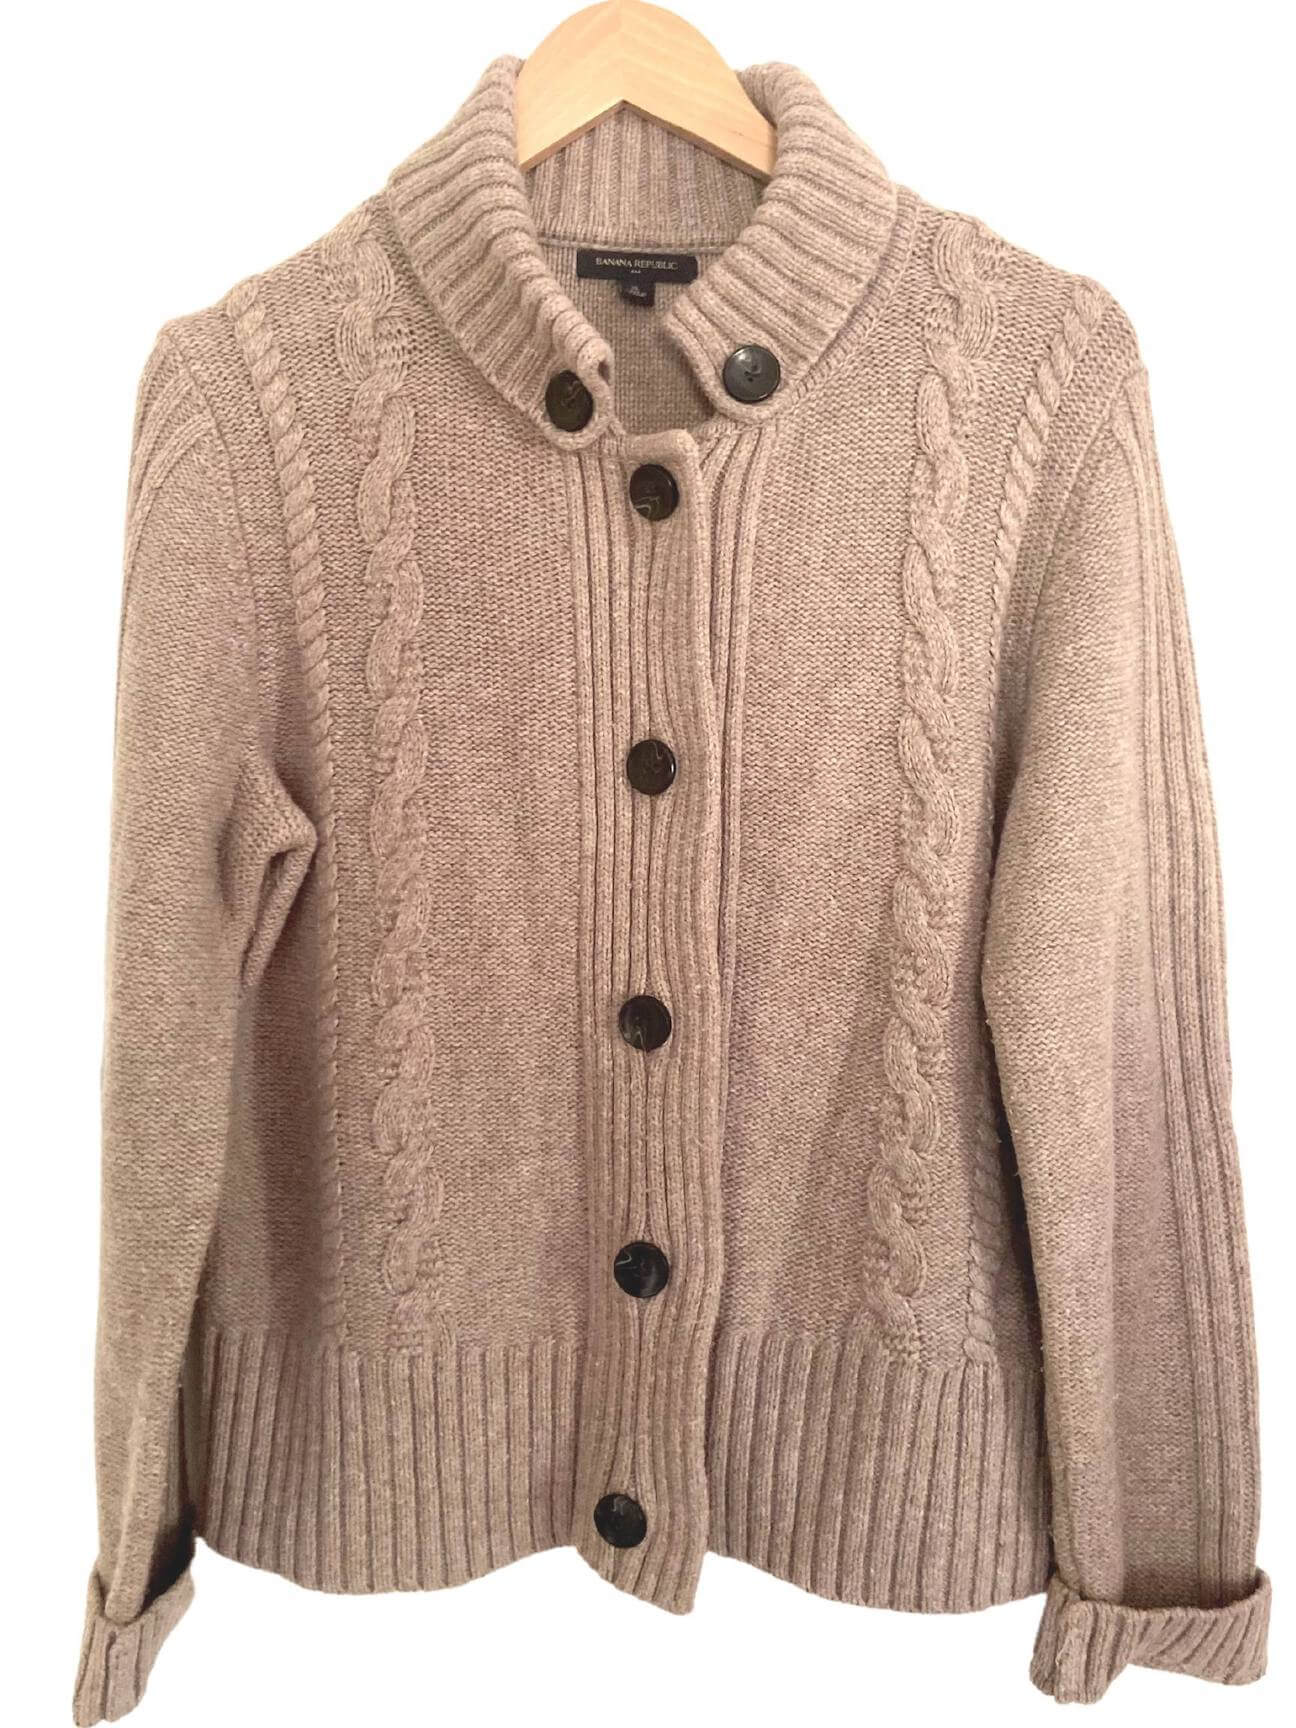 Soft Autumn BANANA REPUBLIC cable knit sweater coat